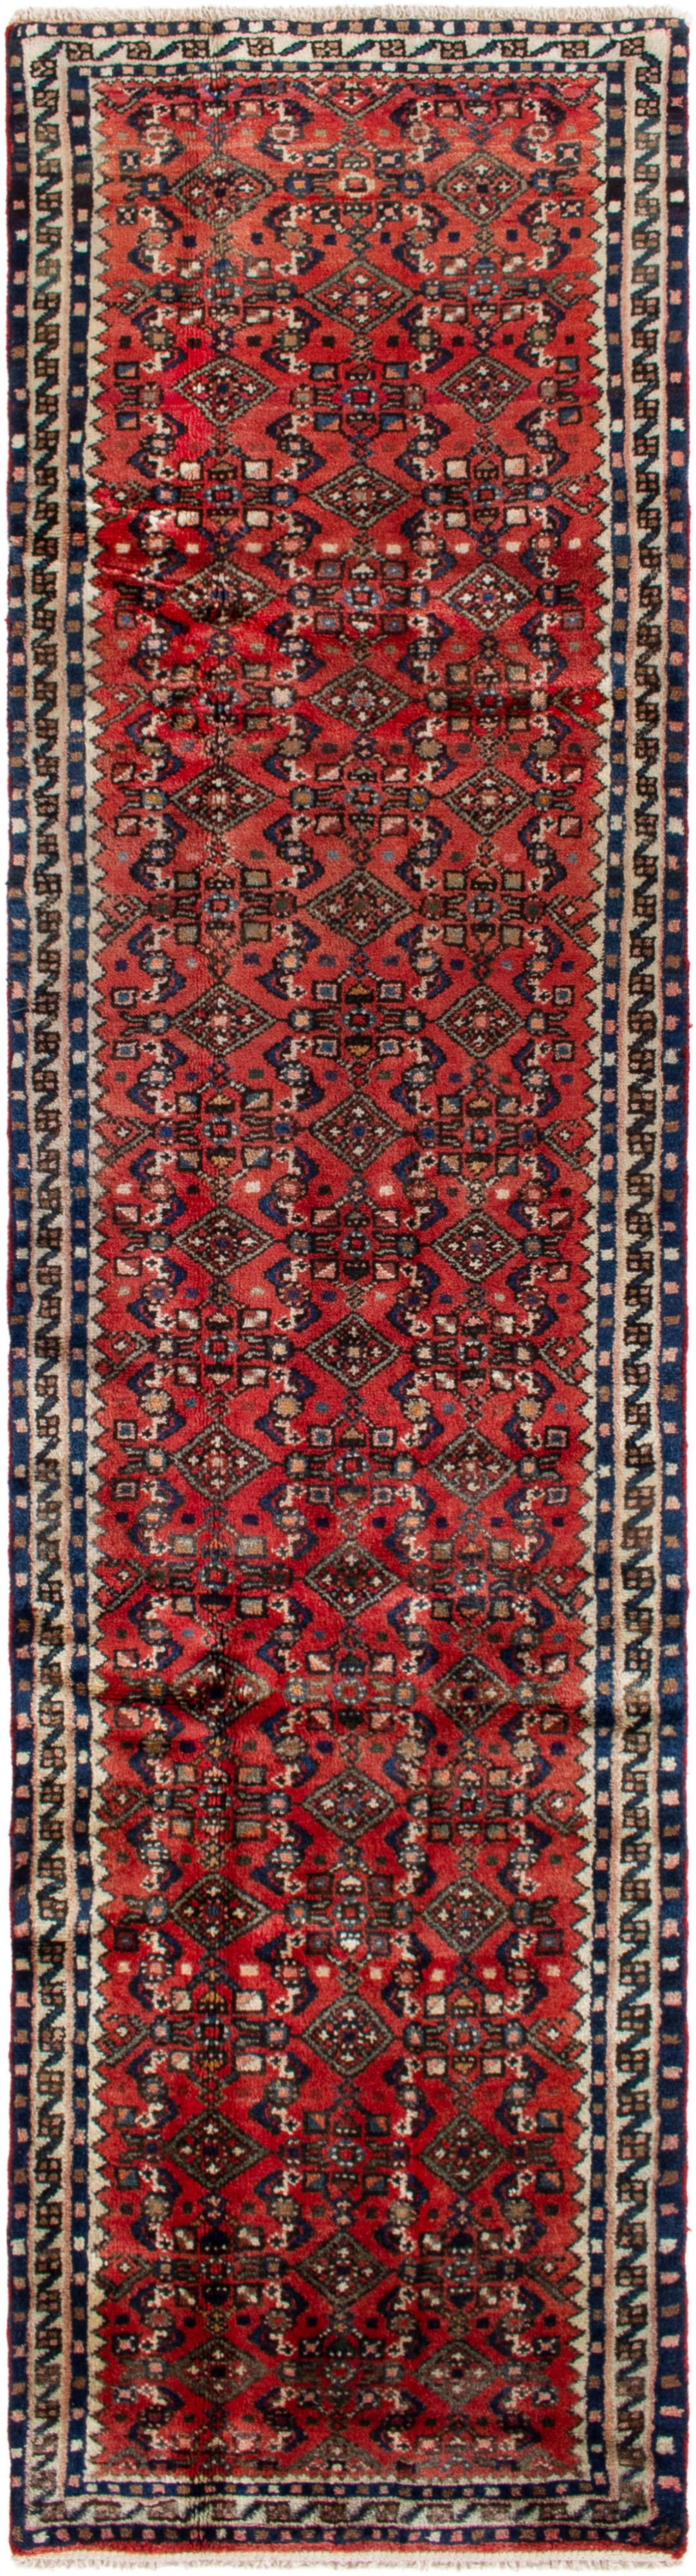 Hand-knotted Hamadan  Wool Rug 2'6" x 9'5"  Size: 2'6" x 9'5"  